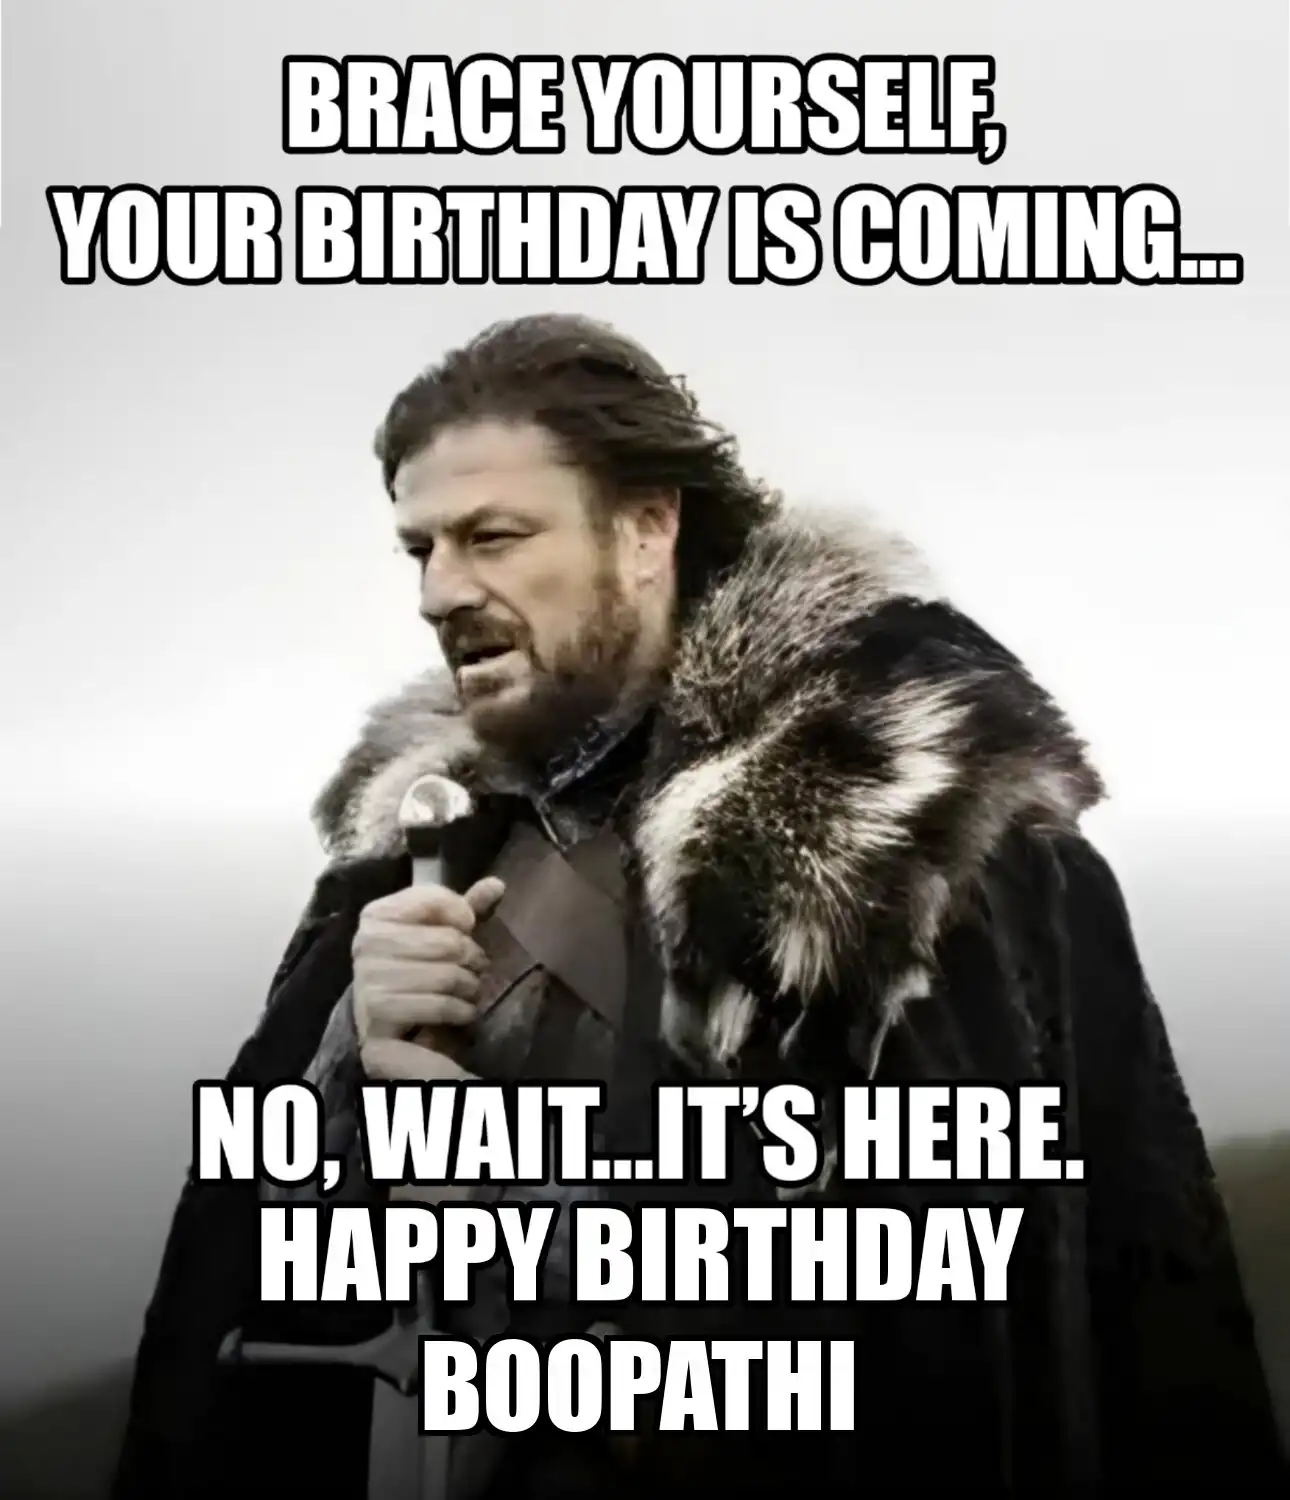 Happy Birthday Boopathi Brace Yourself Your Birthday Is Coming Meme